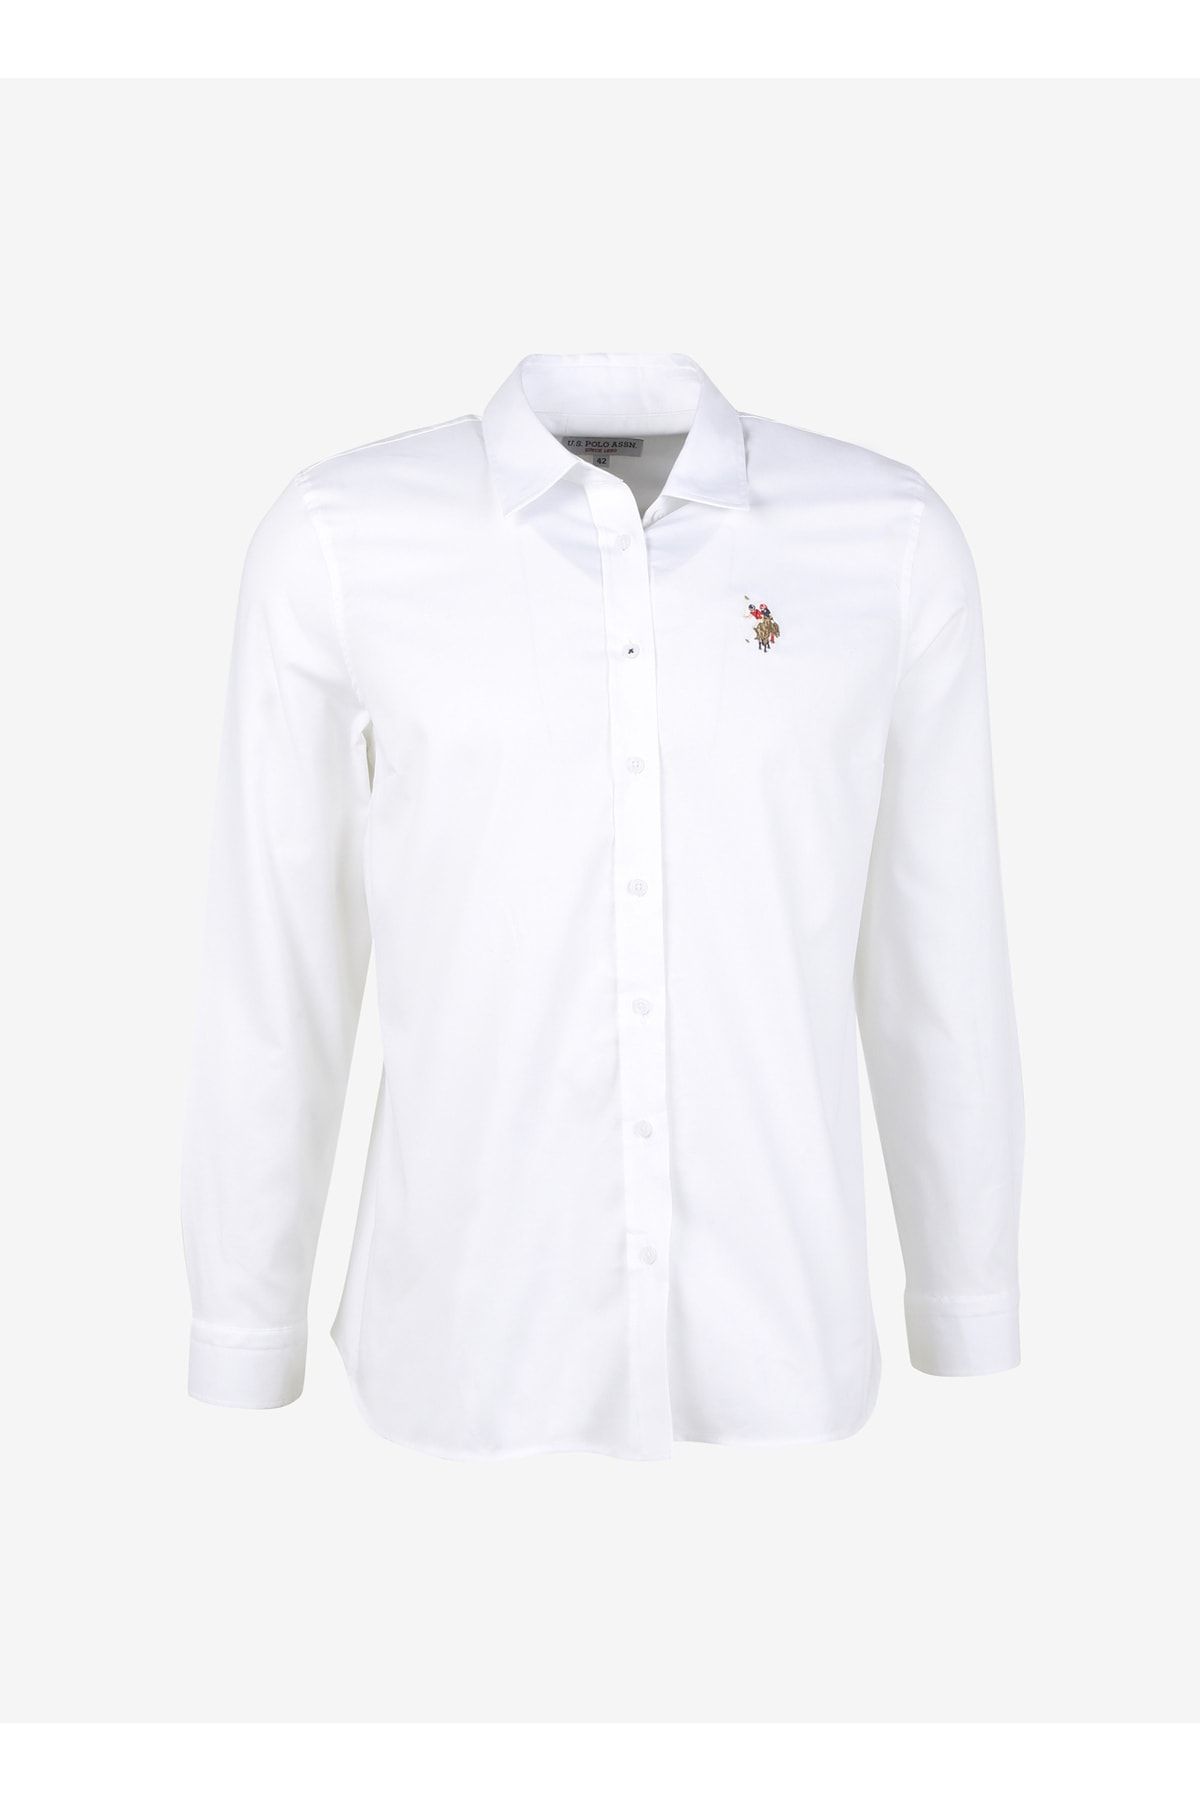 U.S. Polo Assn. Gömlek, 46, Beyaz